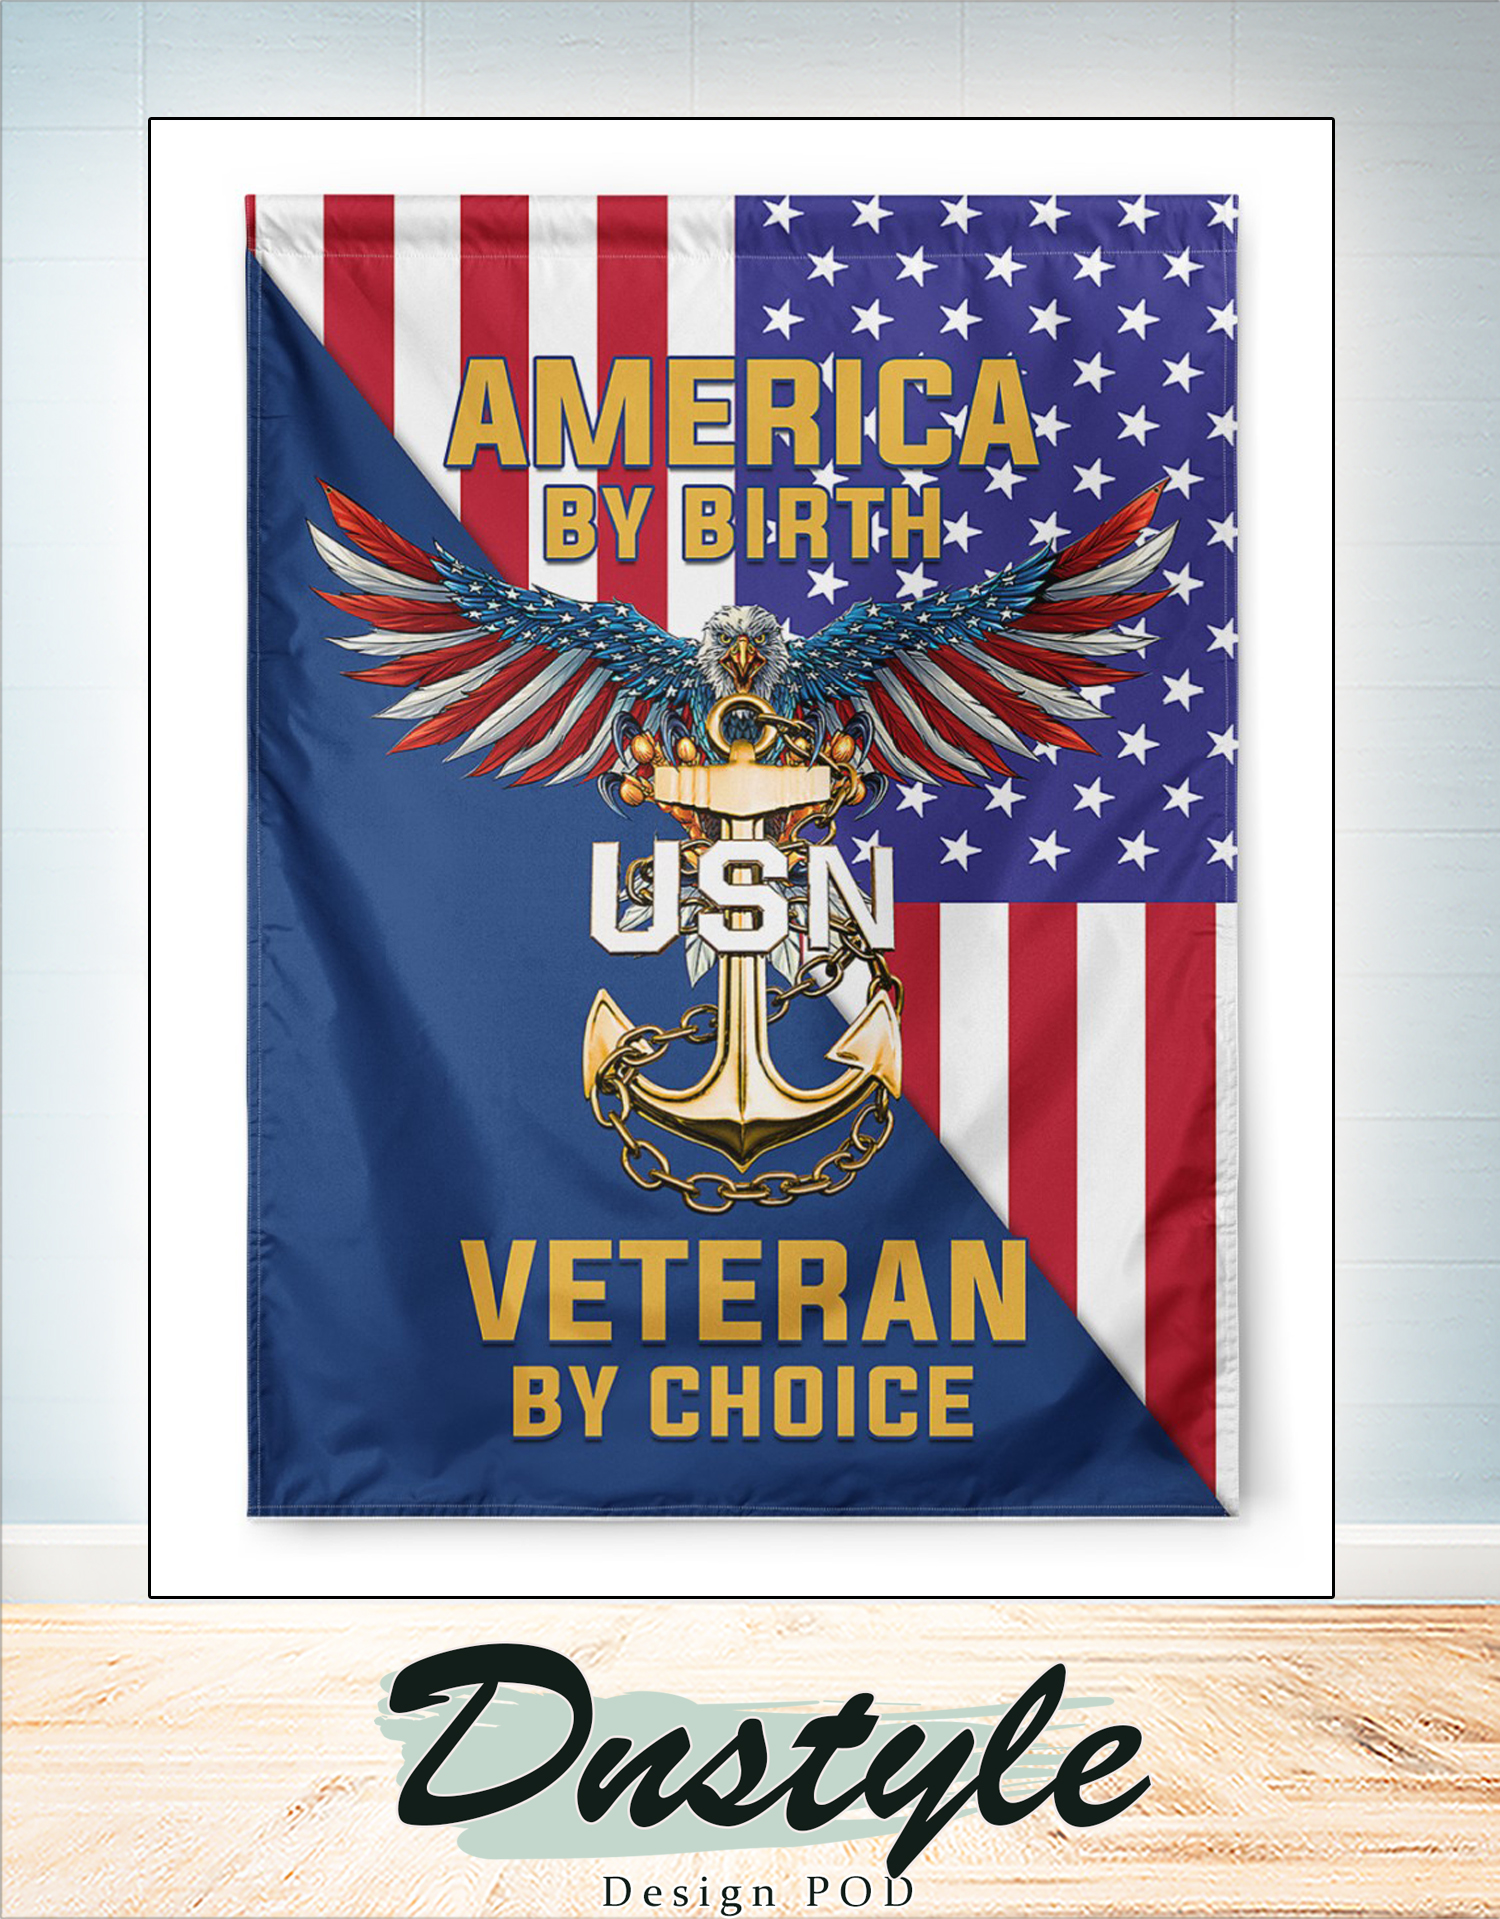 America by birth veteran by choice flag